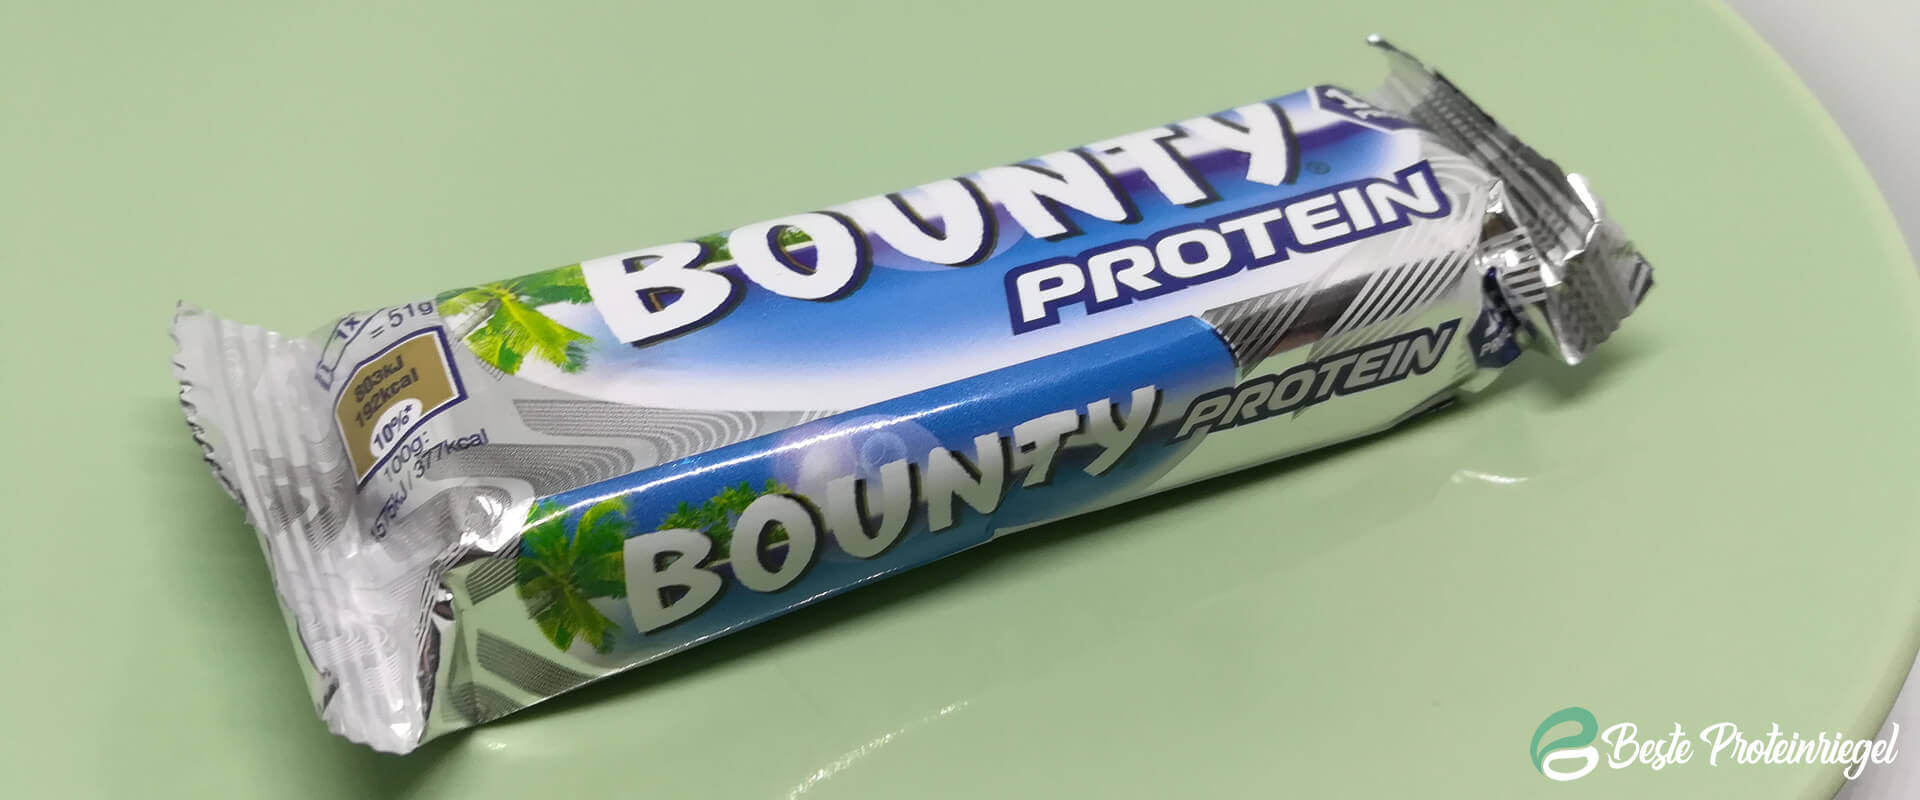 Bounty Protein Riegel Verpackung